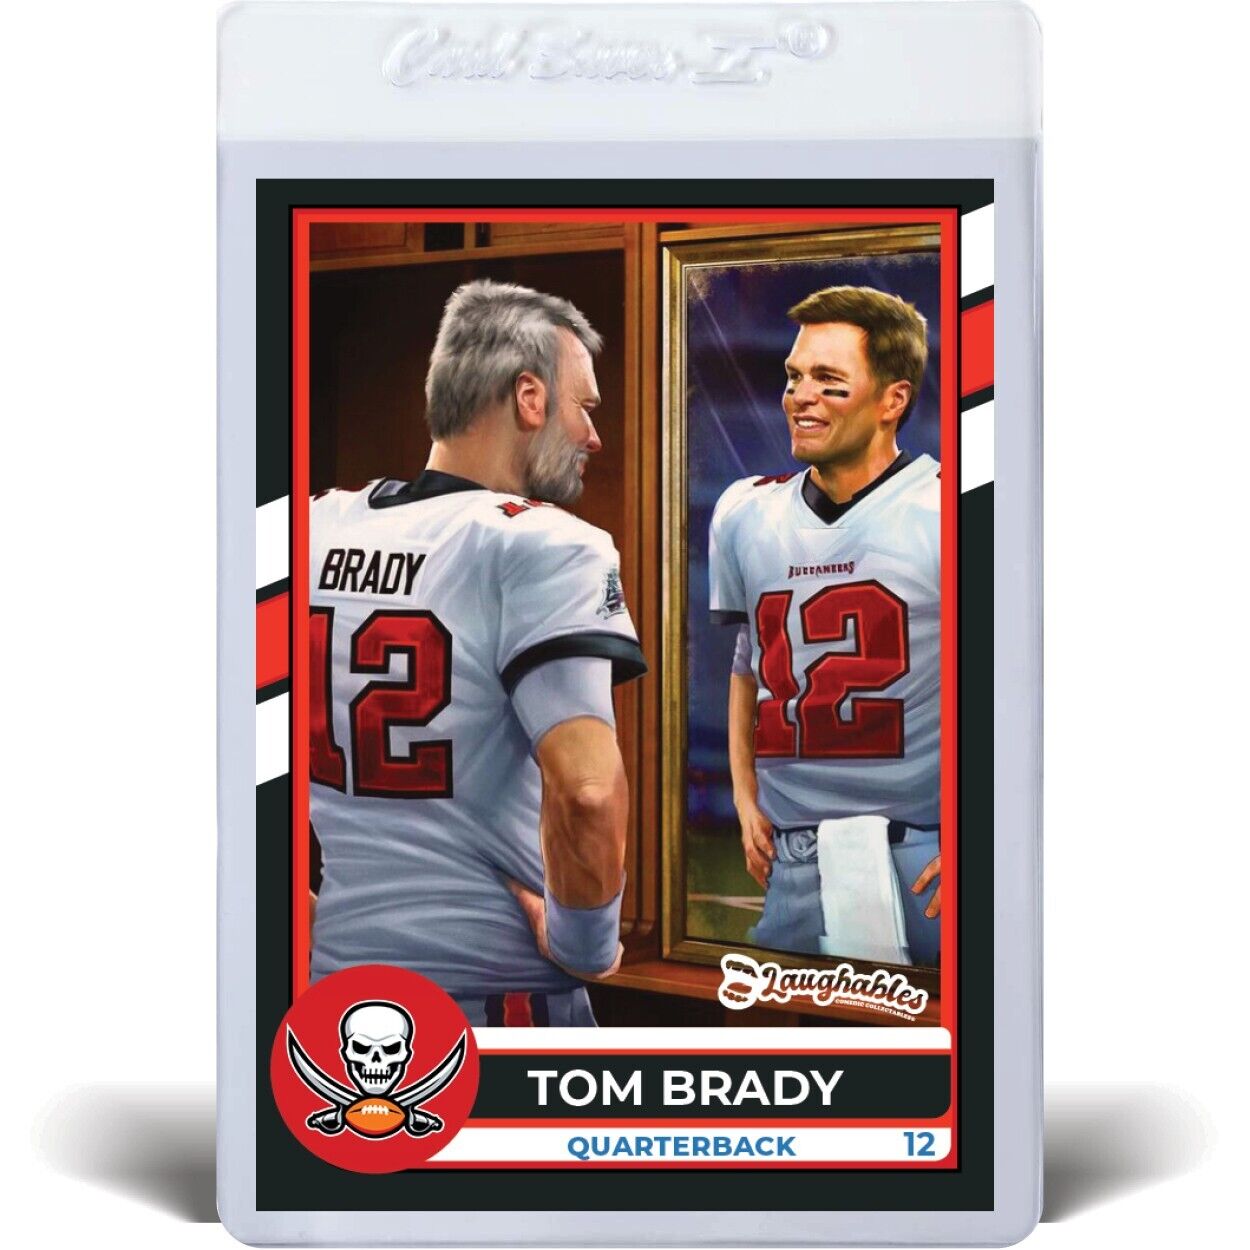 Tom Brady, Man in the Mirror, Limited